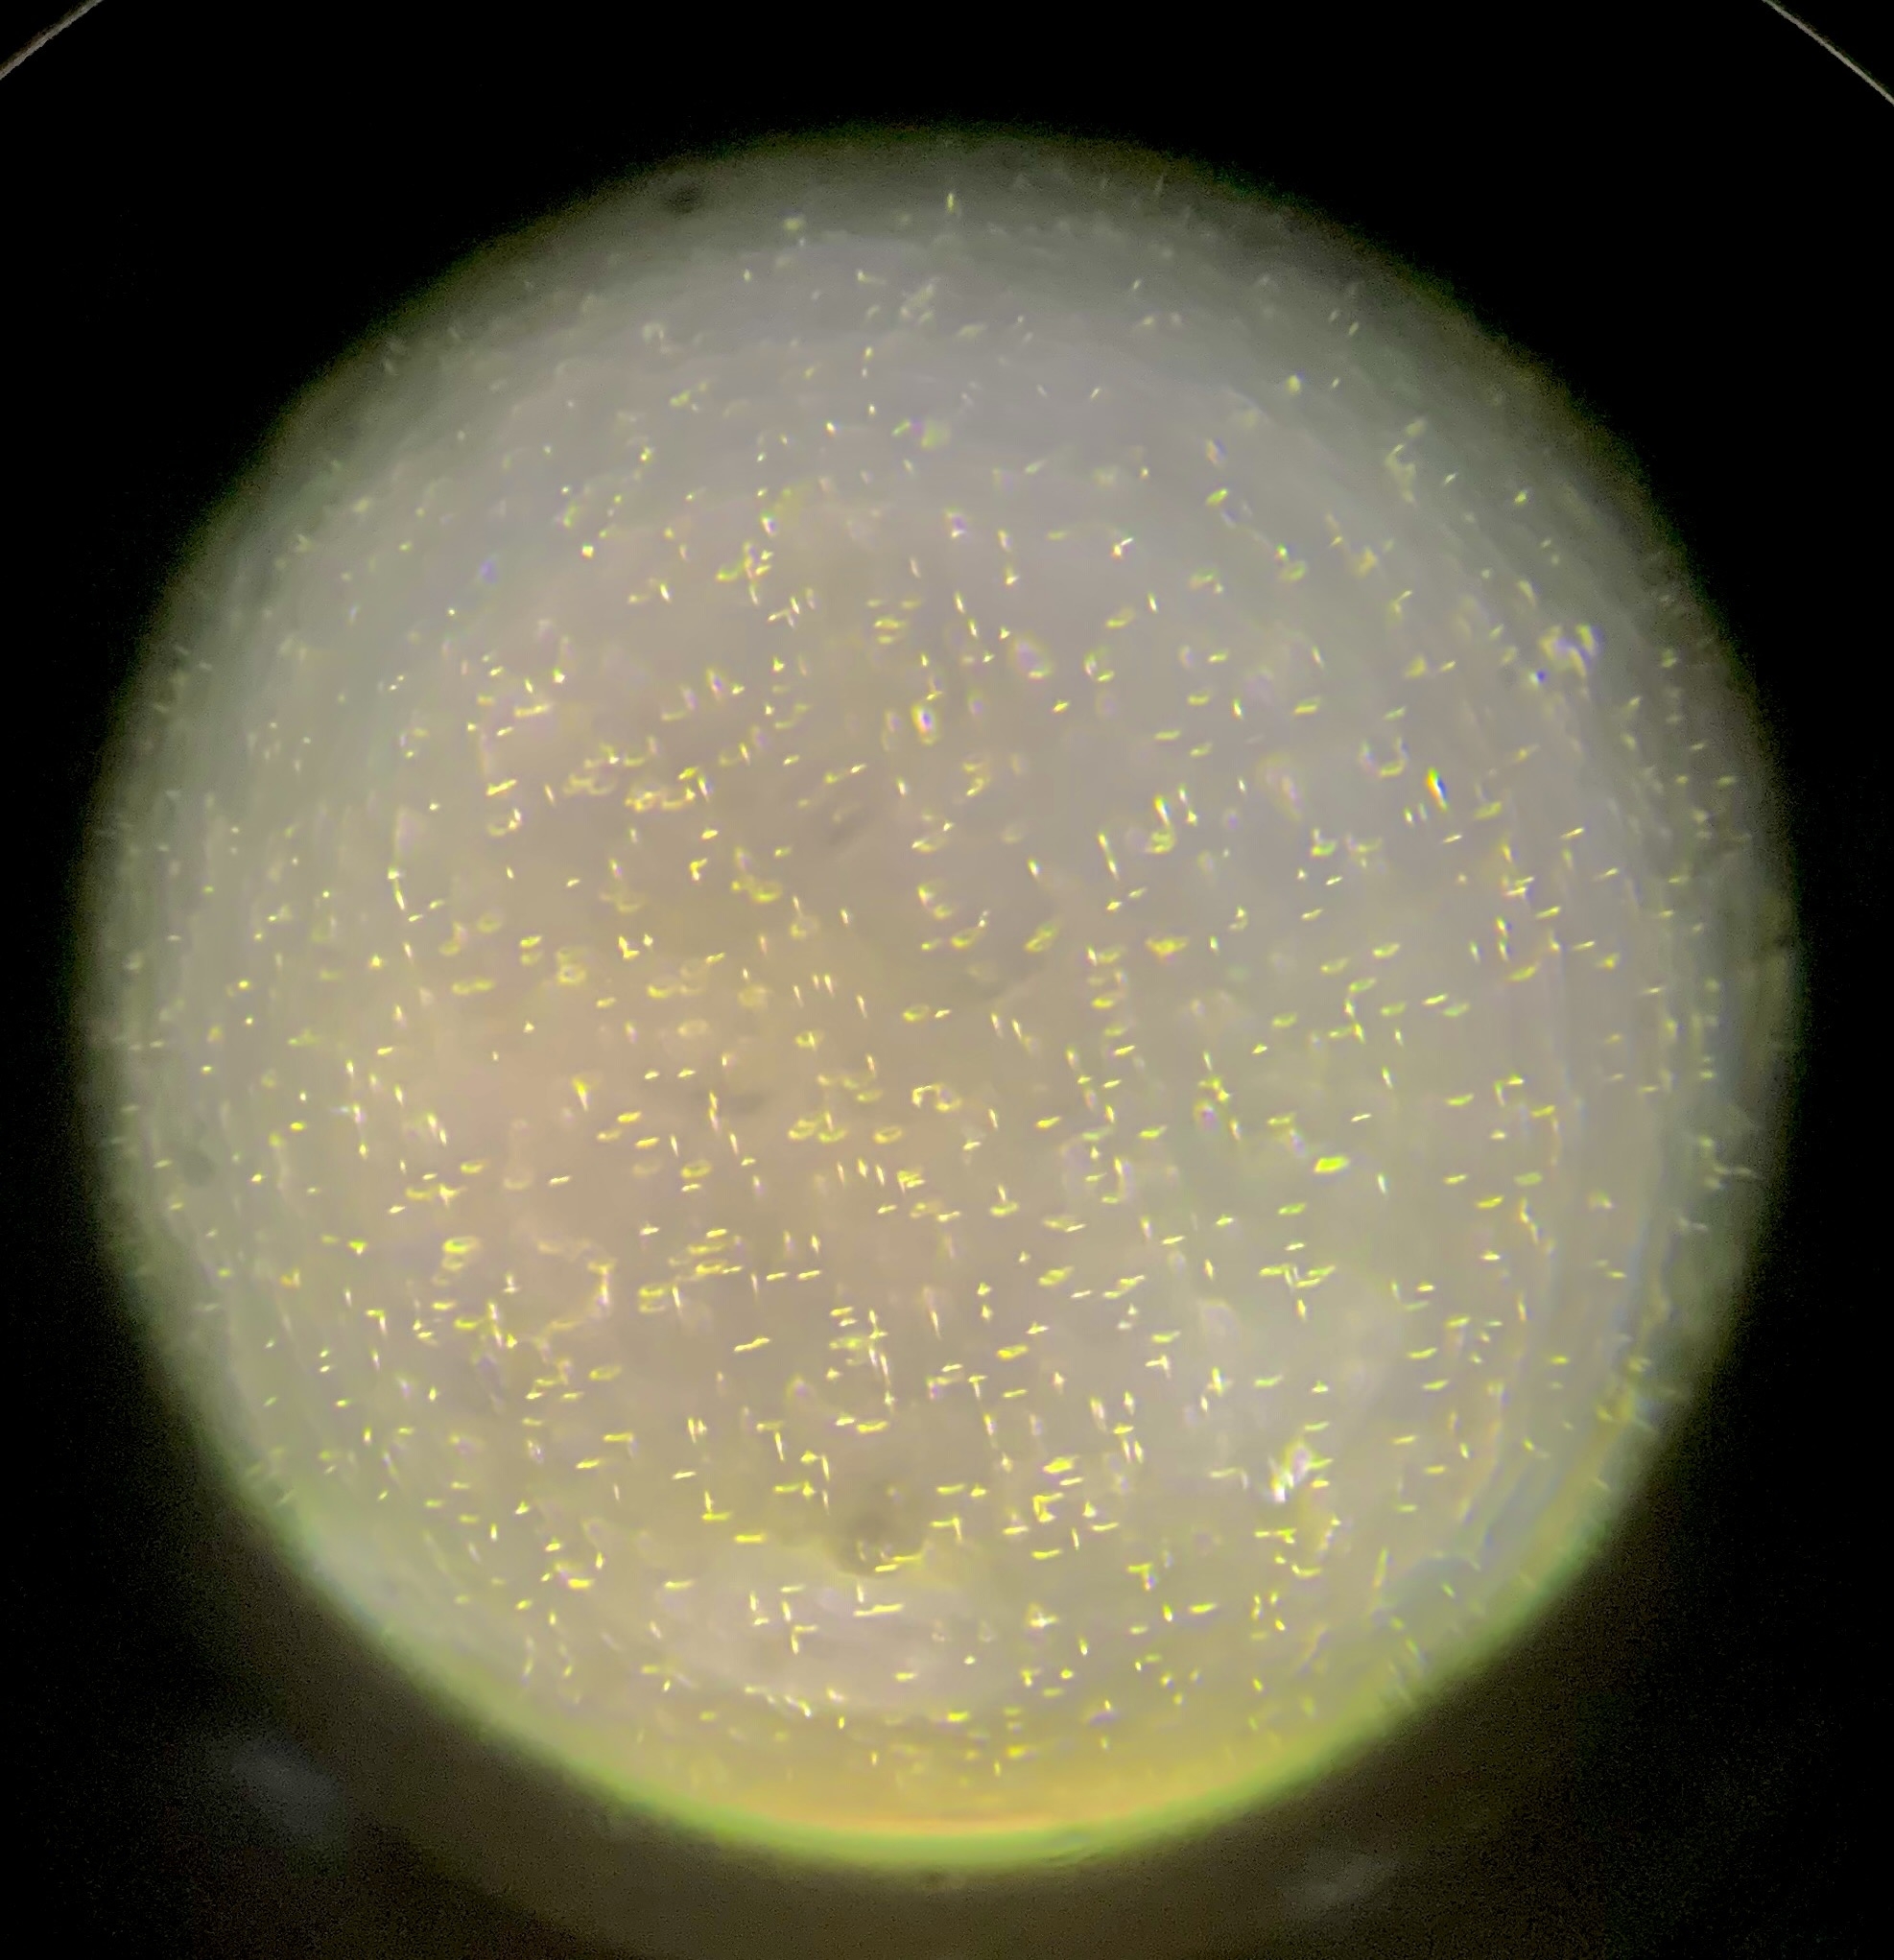 Bright green specks of algae seen through a microscope lens.